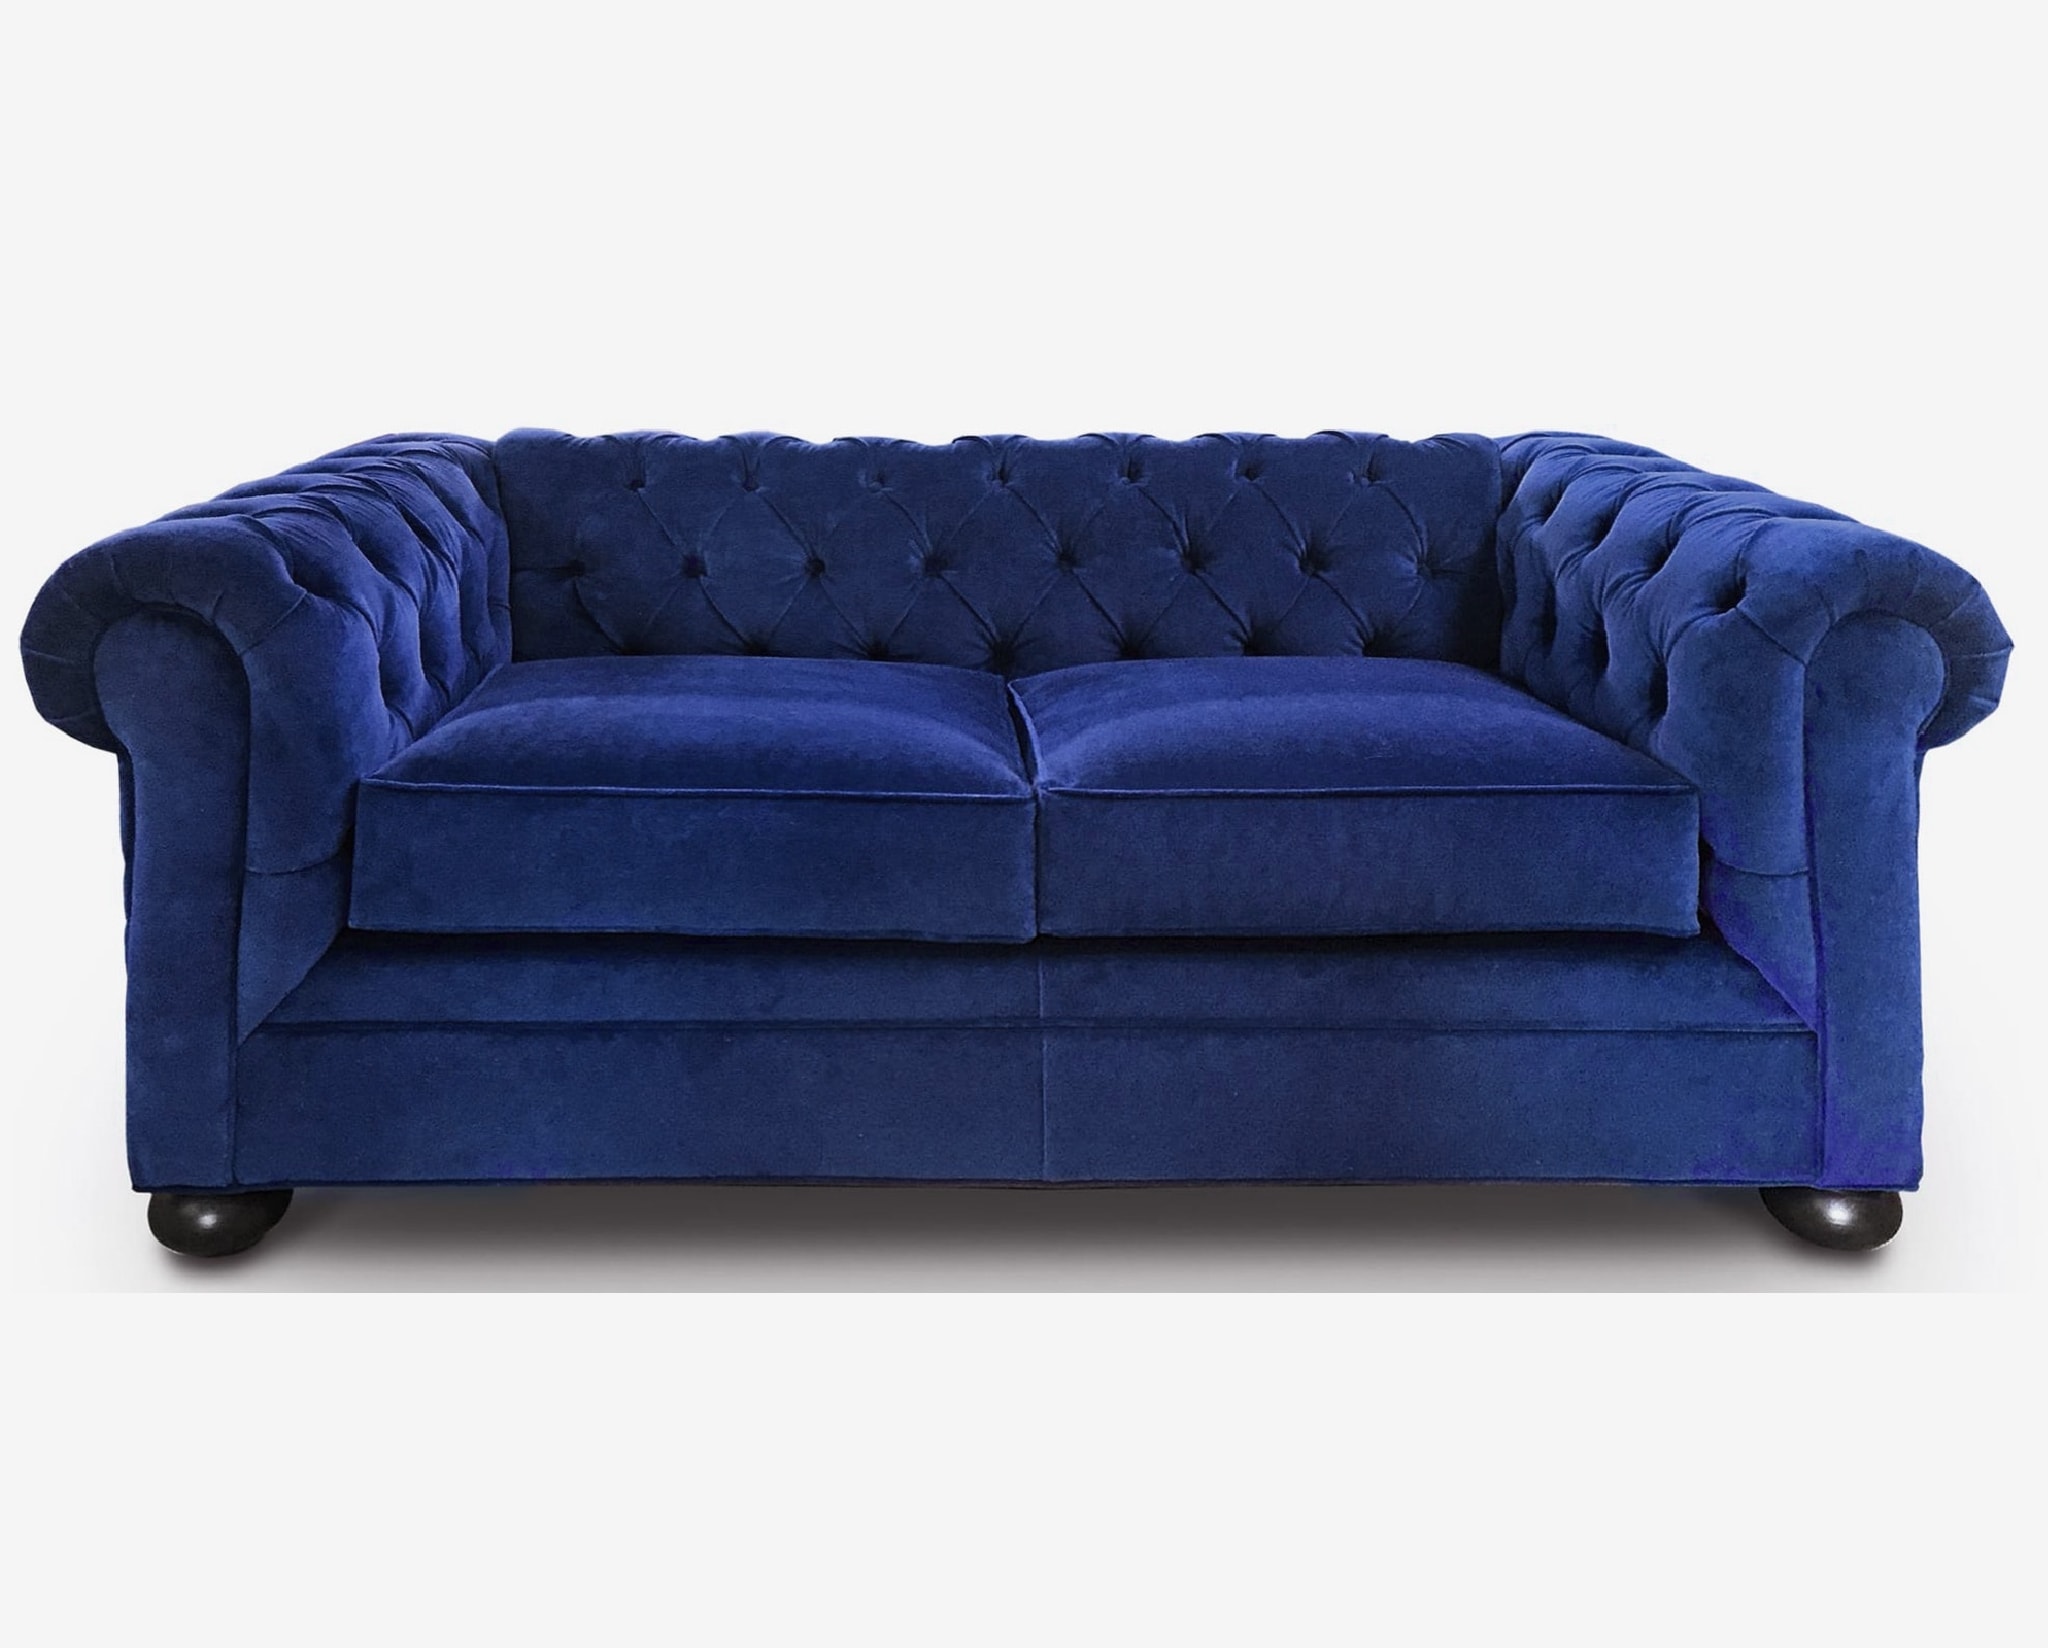 Irving Tufted Chesterfield Three Cushion Sofa in Sapphire Blue Velvet